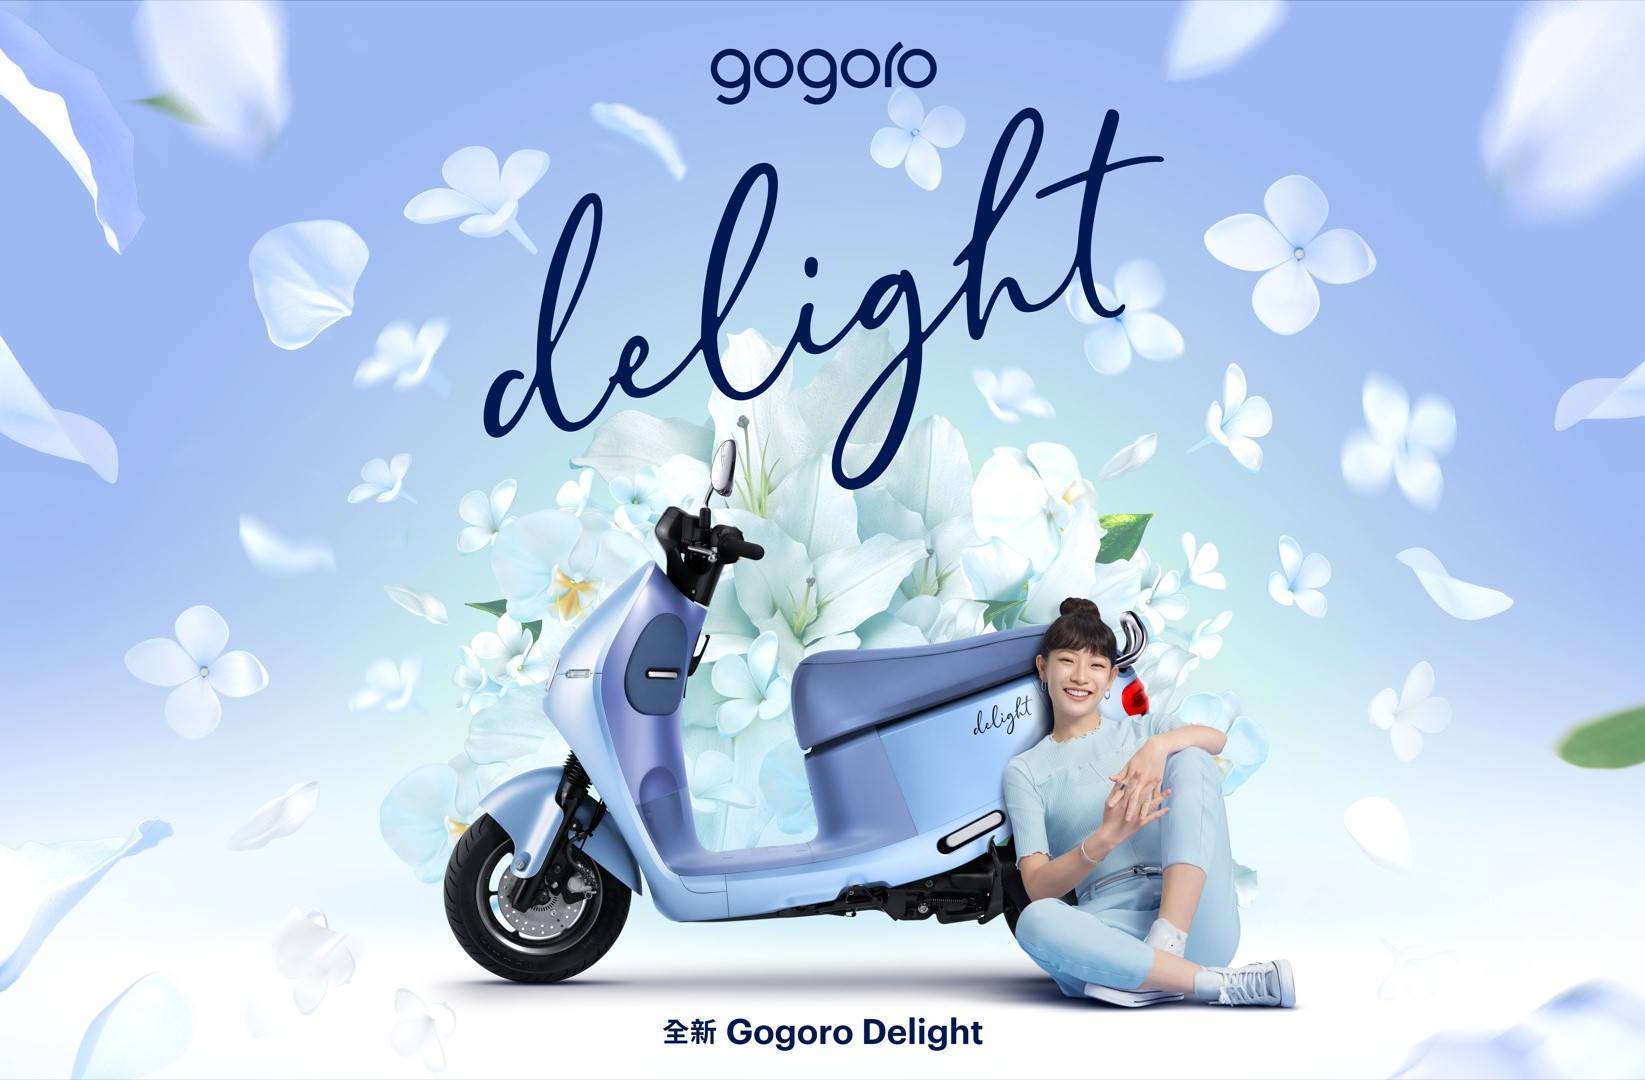 Gogoro Delight